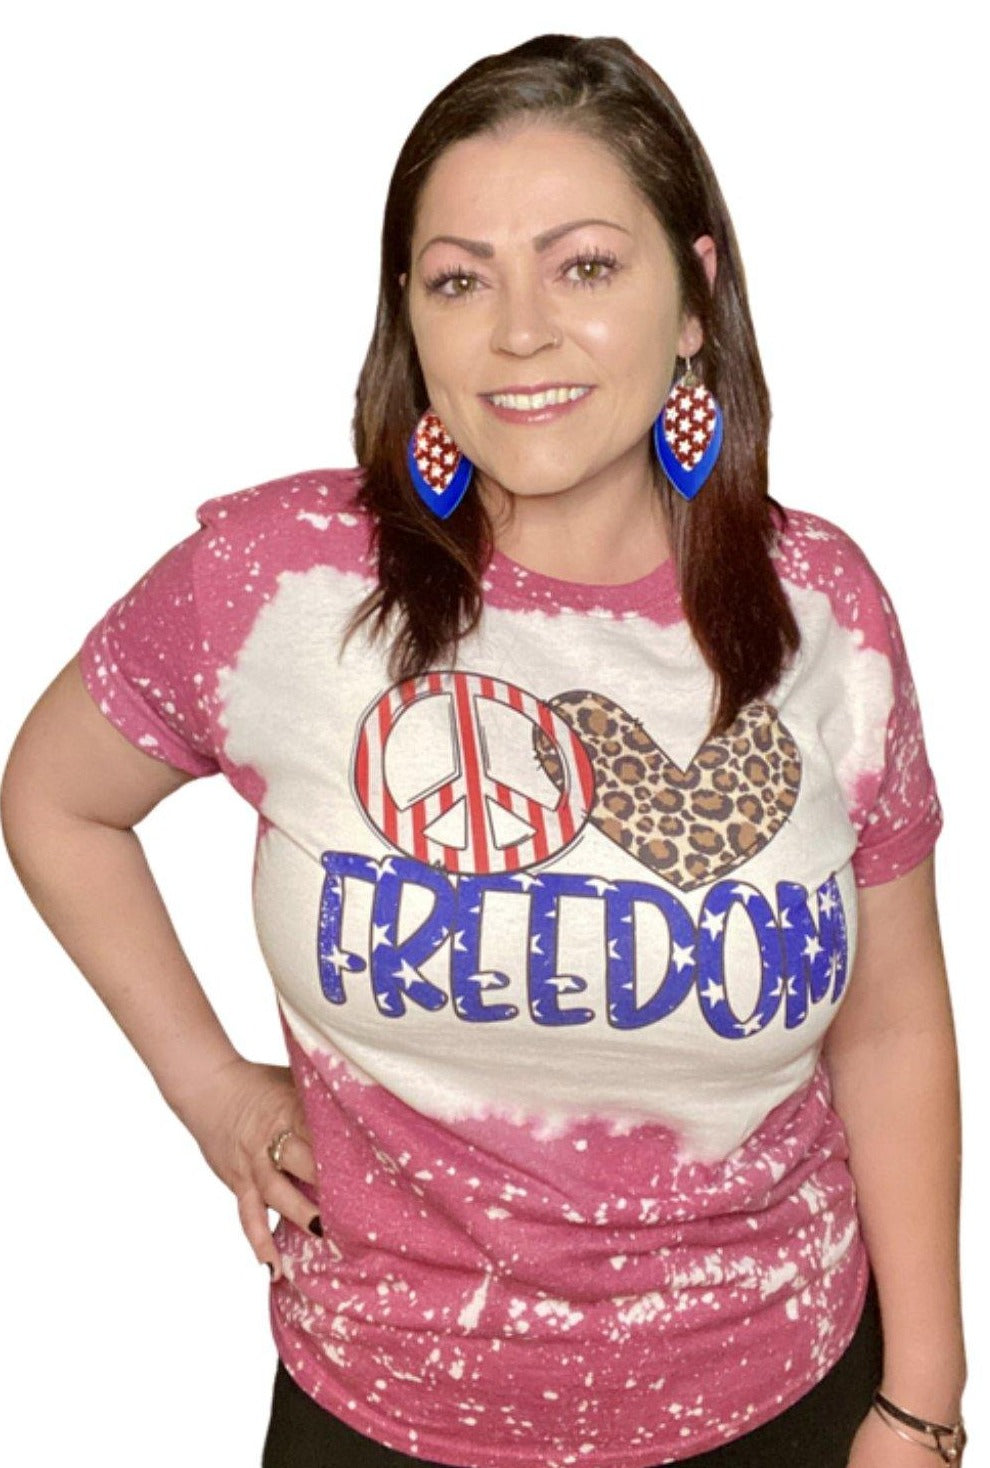 Peace Love Freedom - Women's shirts -  Rustic Cuts